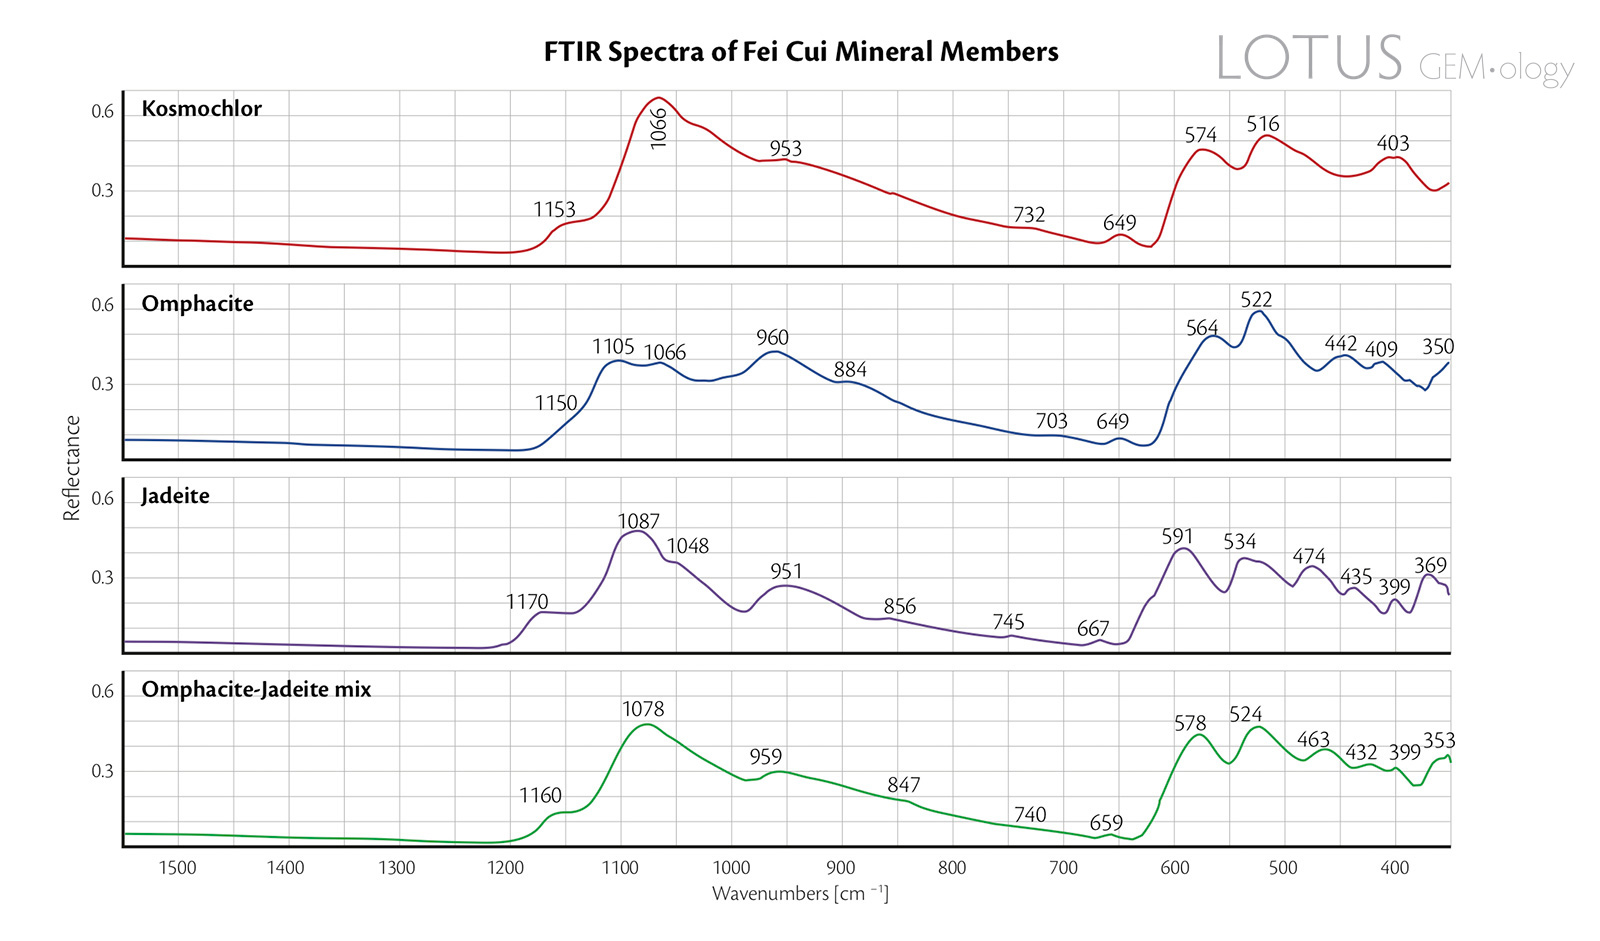 Figure 7. Reflectance FTIR spectra of the four representative fei cui samples.